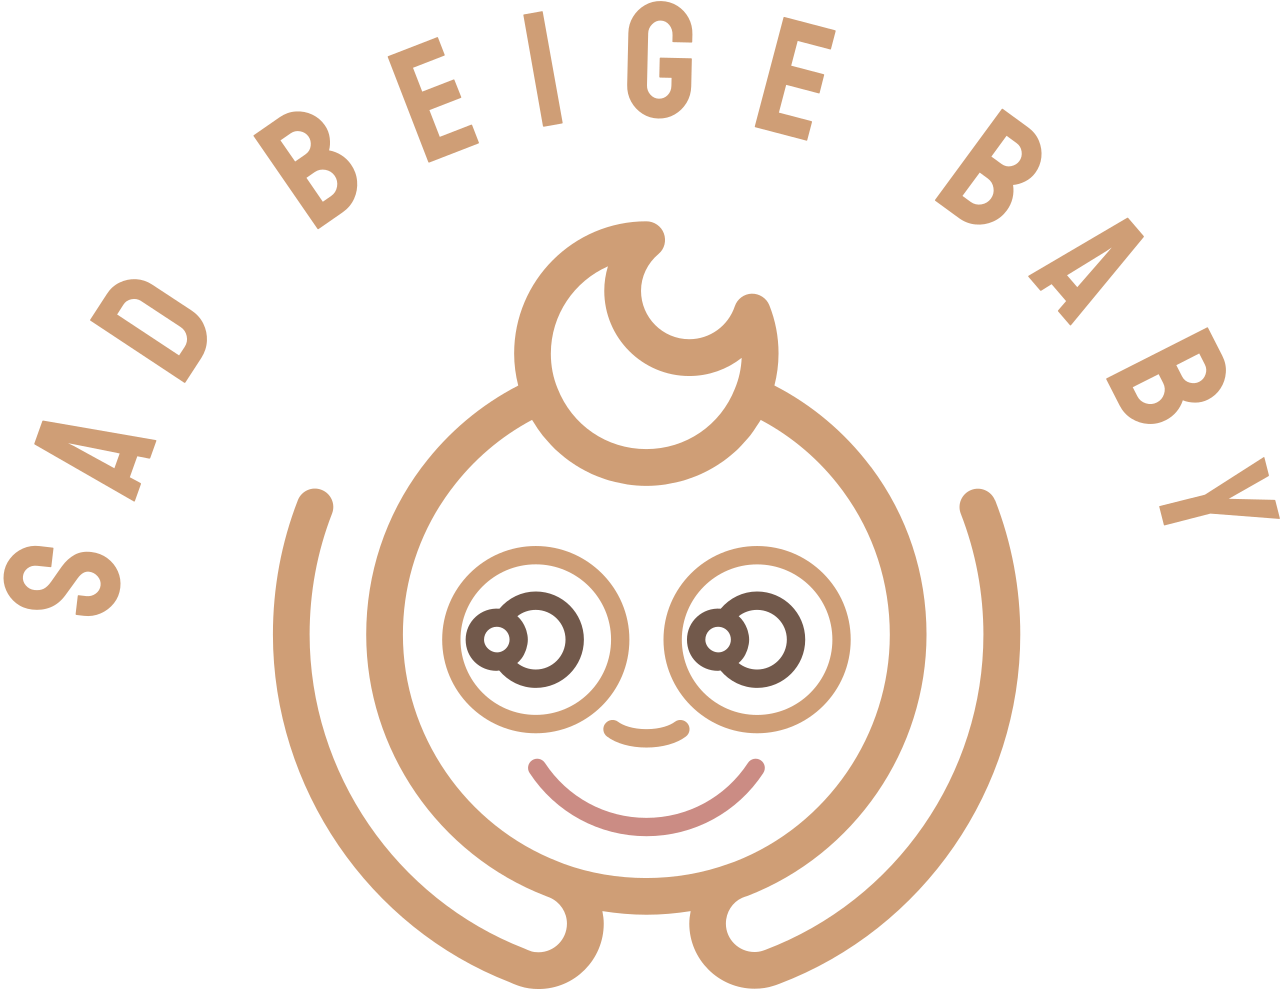 Sad Beige Baby 's web page